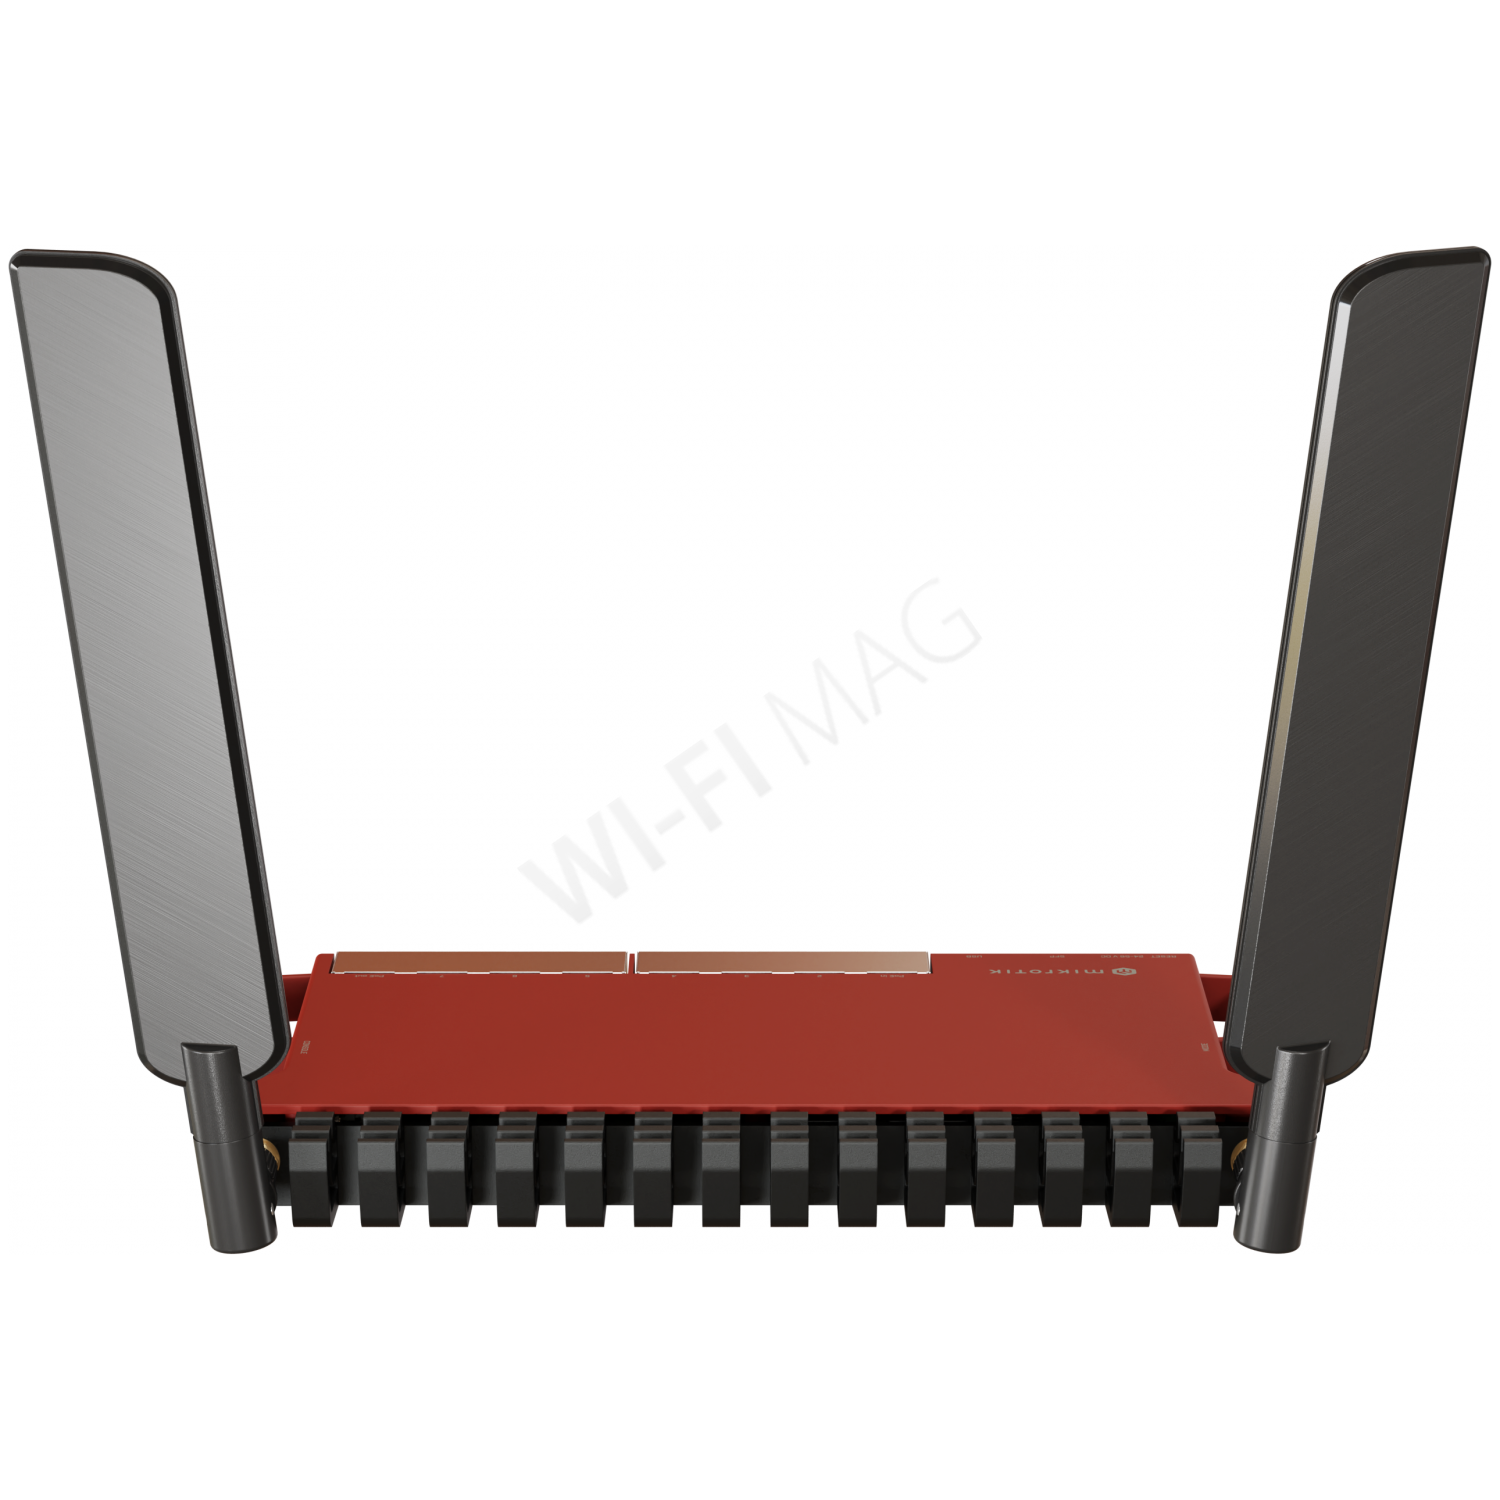 Mikrotik RouterBOARD L009UiGS-2HaxD-IN, электронное устройство